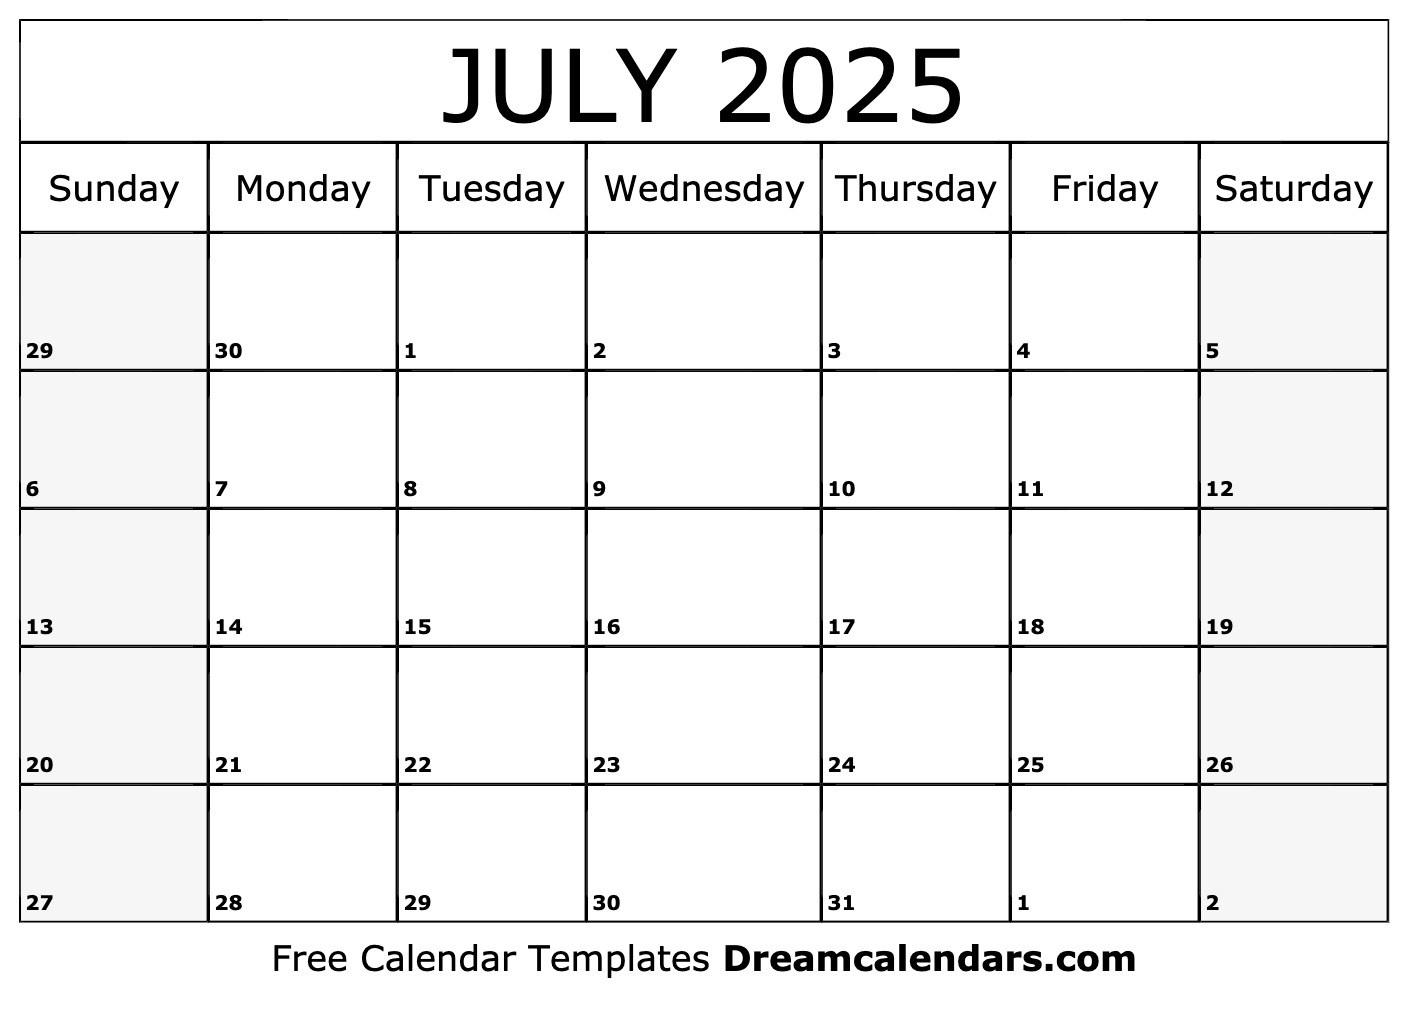 July 2025 Calendar Printable Free Word - darya celestina